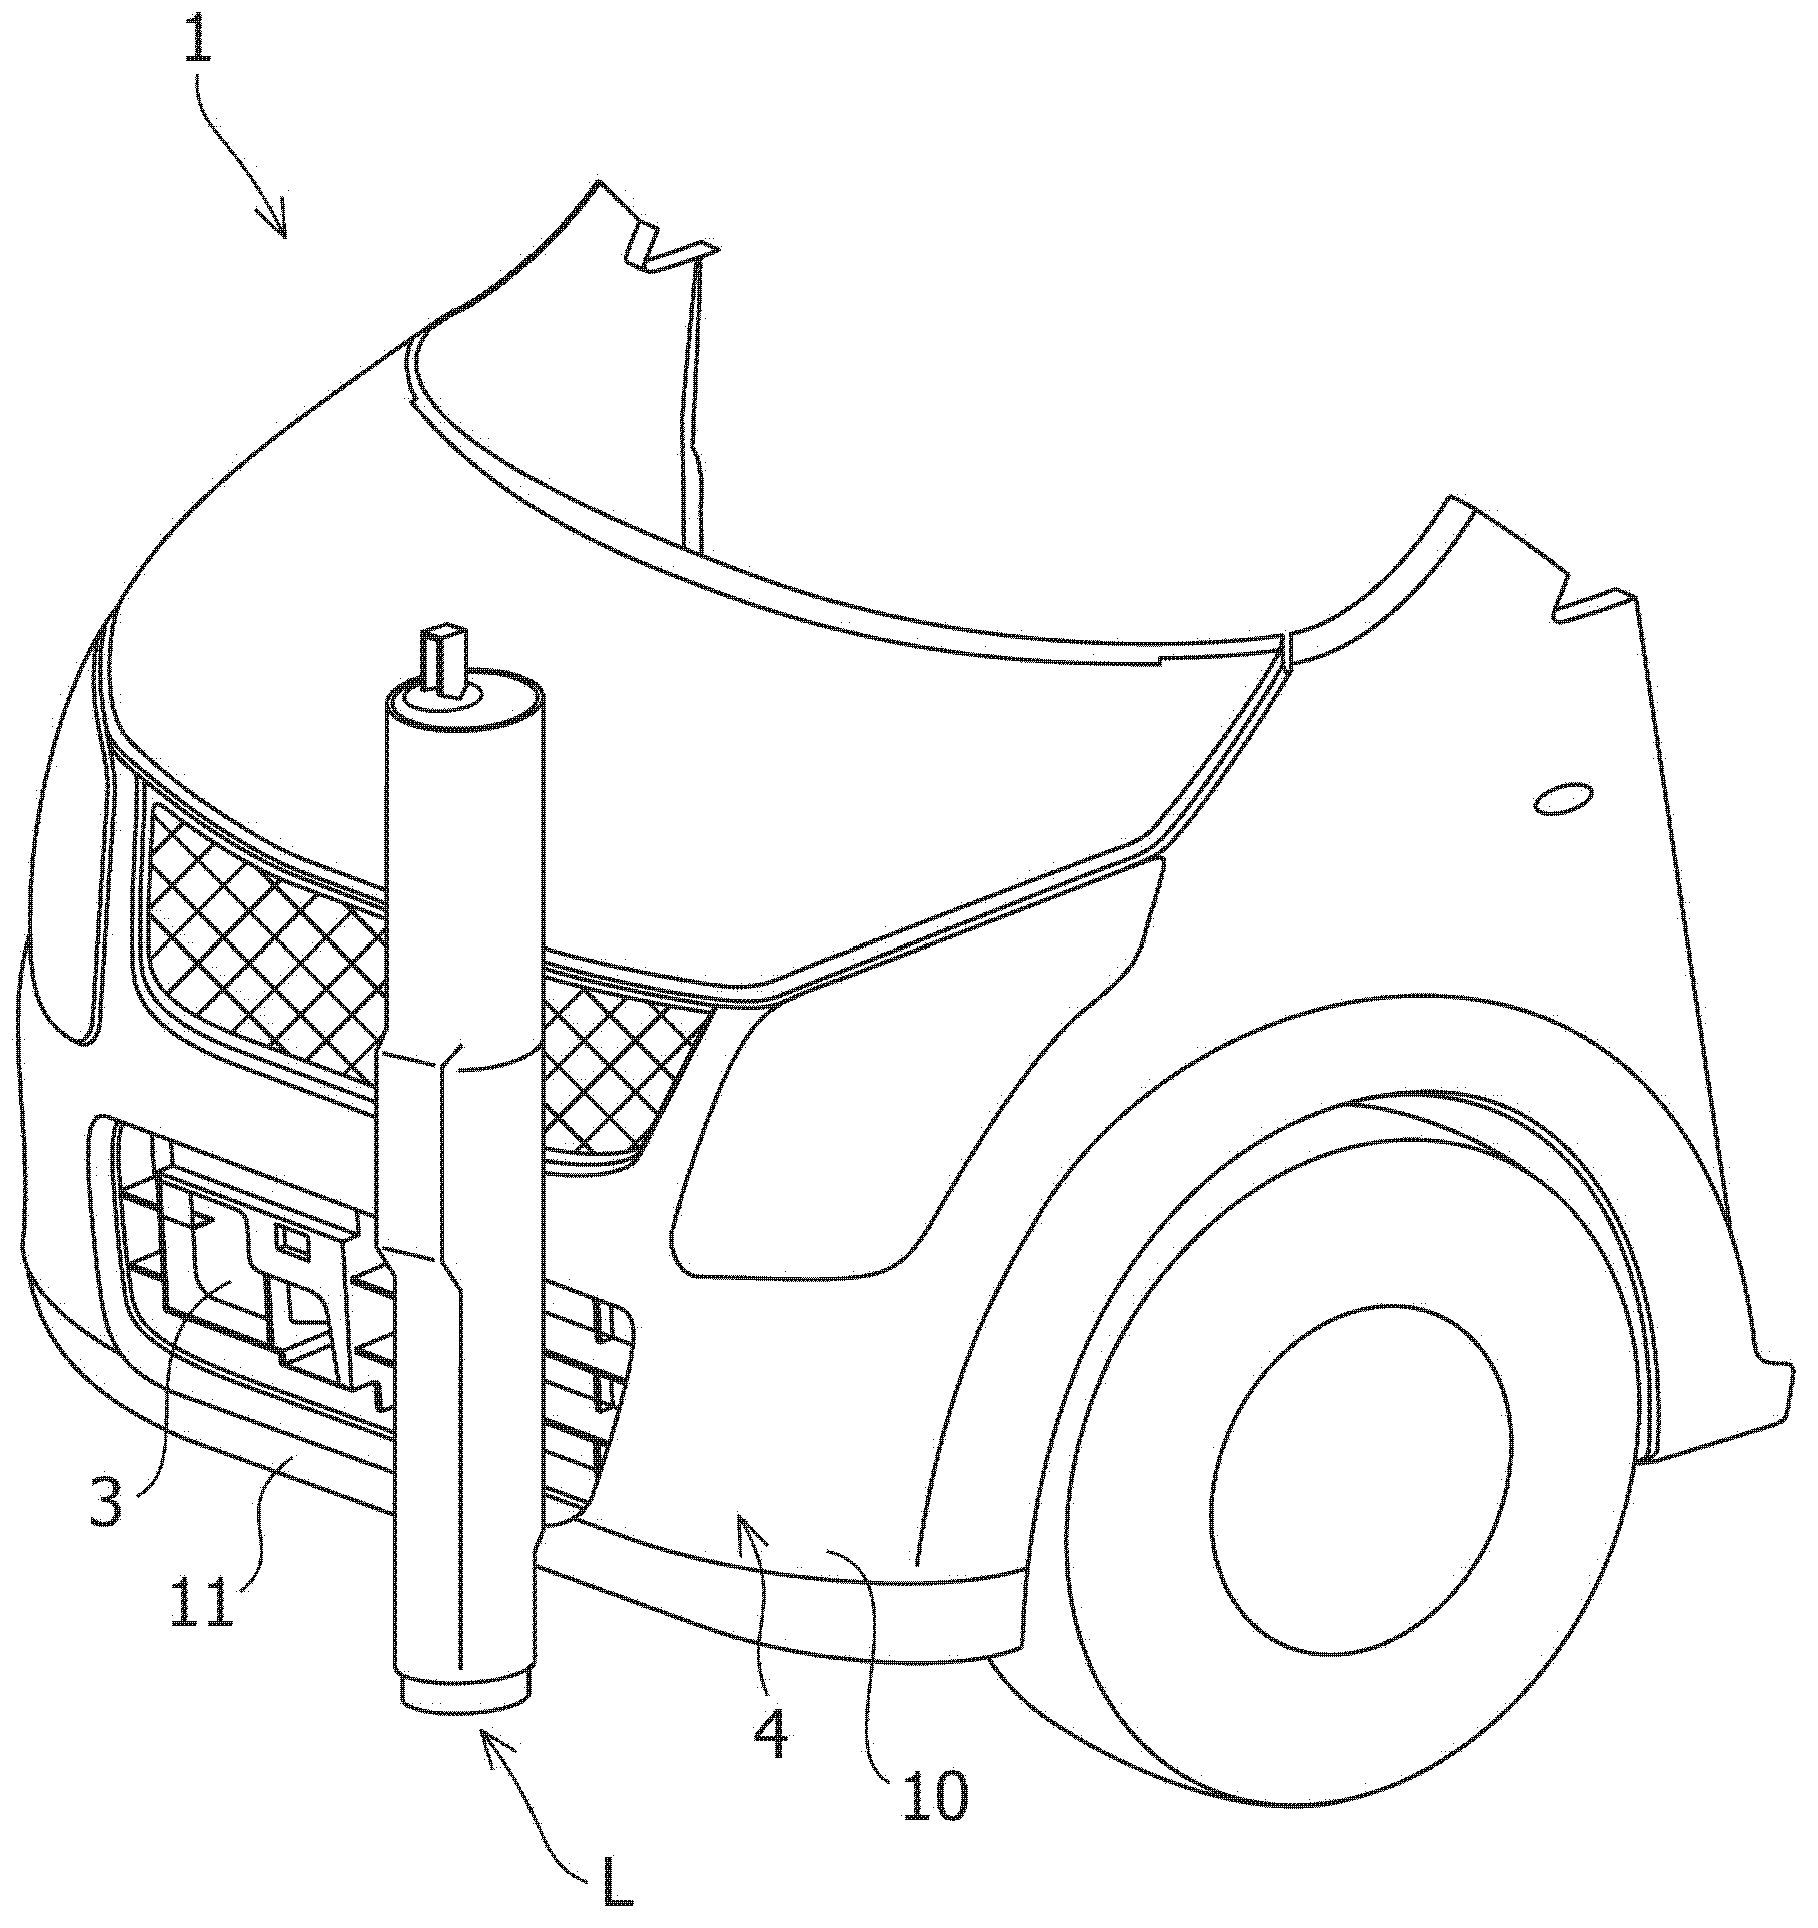 Vehicle bumper structure